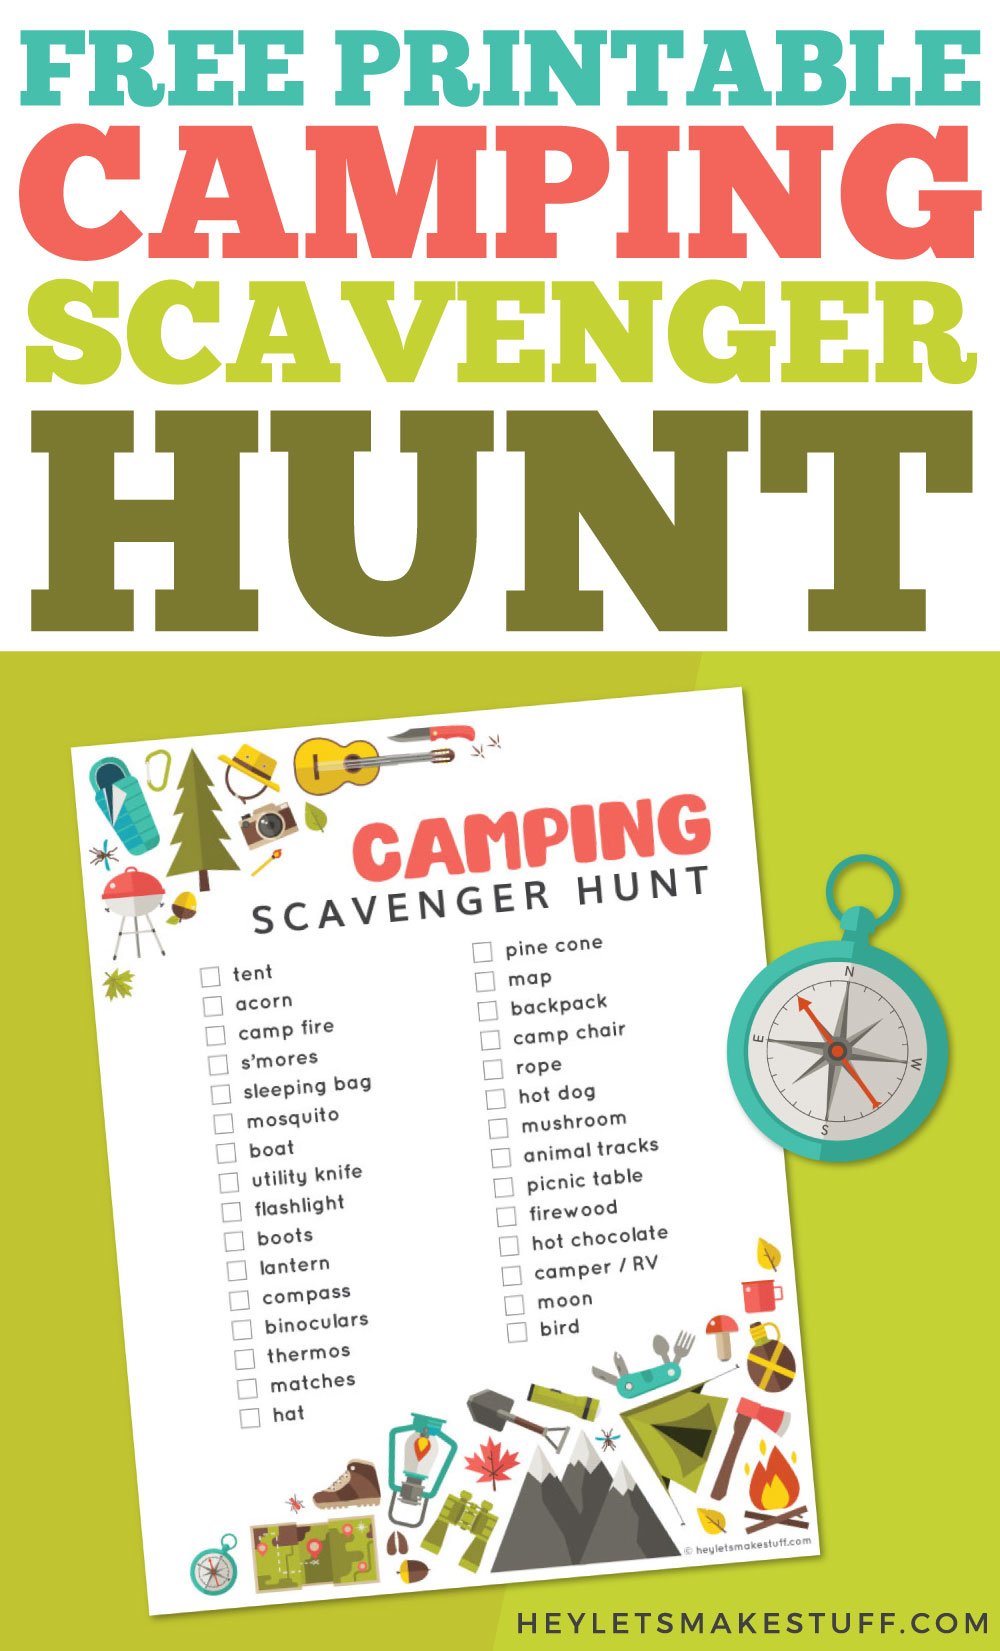 Free Printable Camping Scavenger Hunt Hey Let's Make Stuff